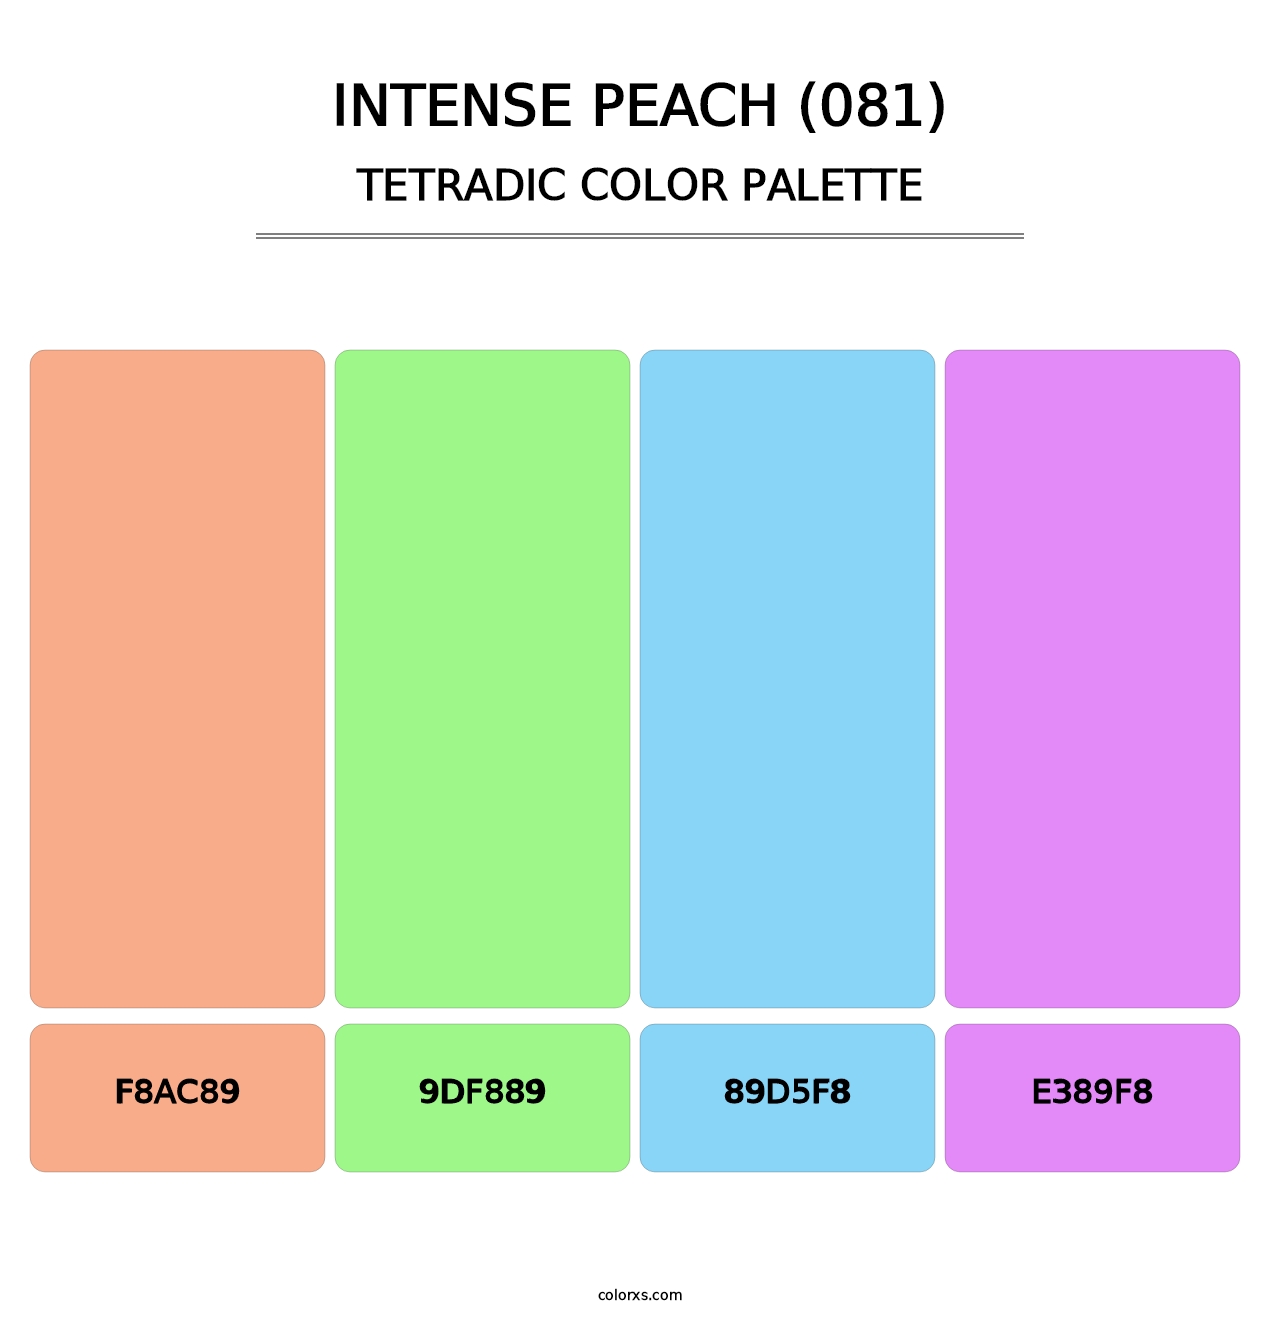 Intense Peach (081) - Tetradic Color Palette